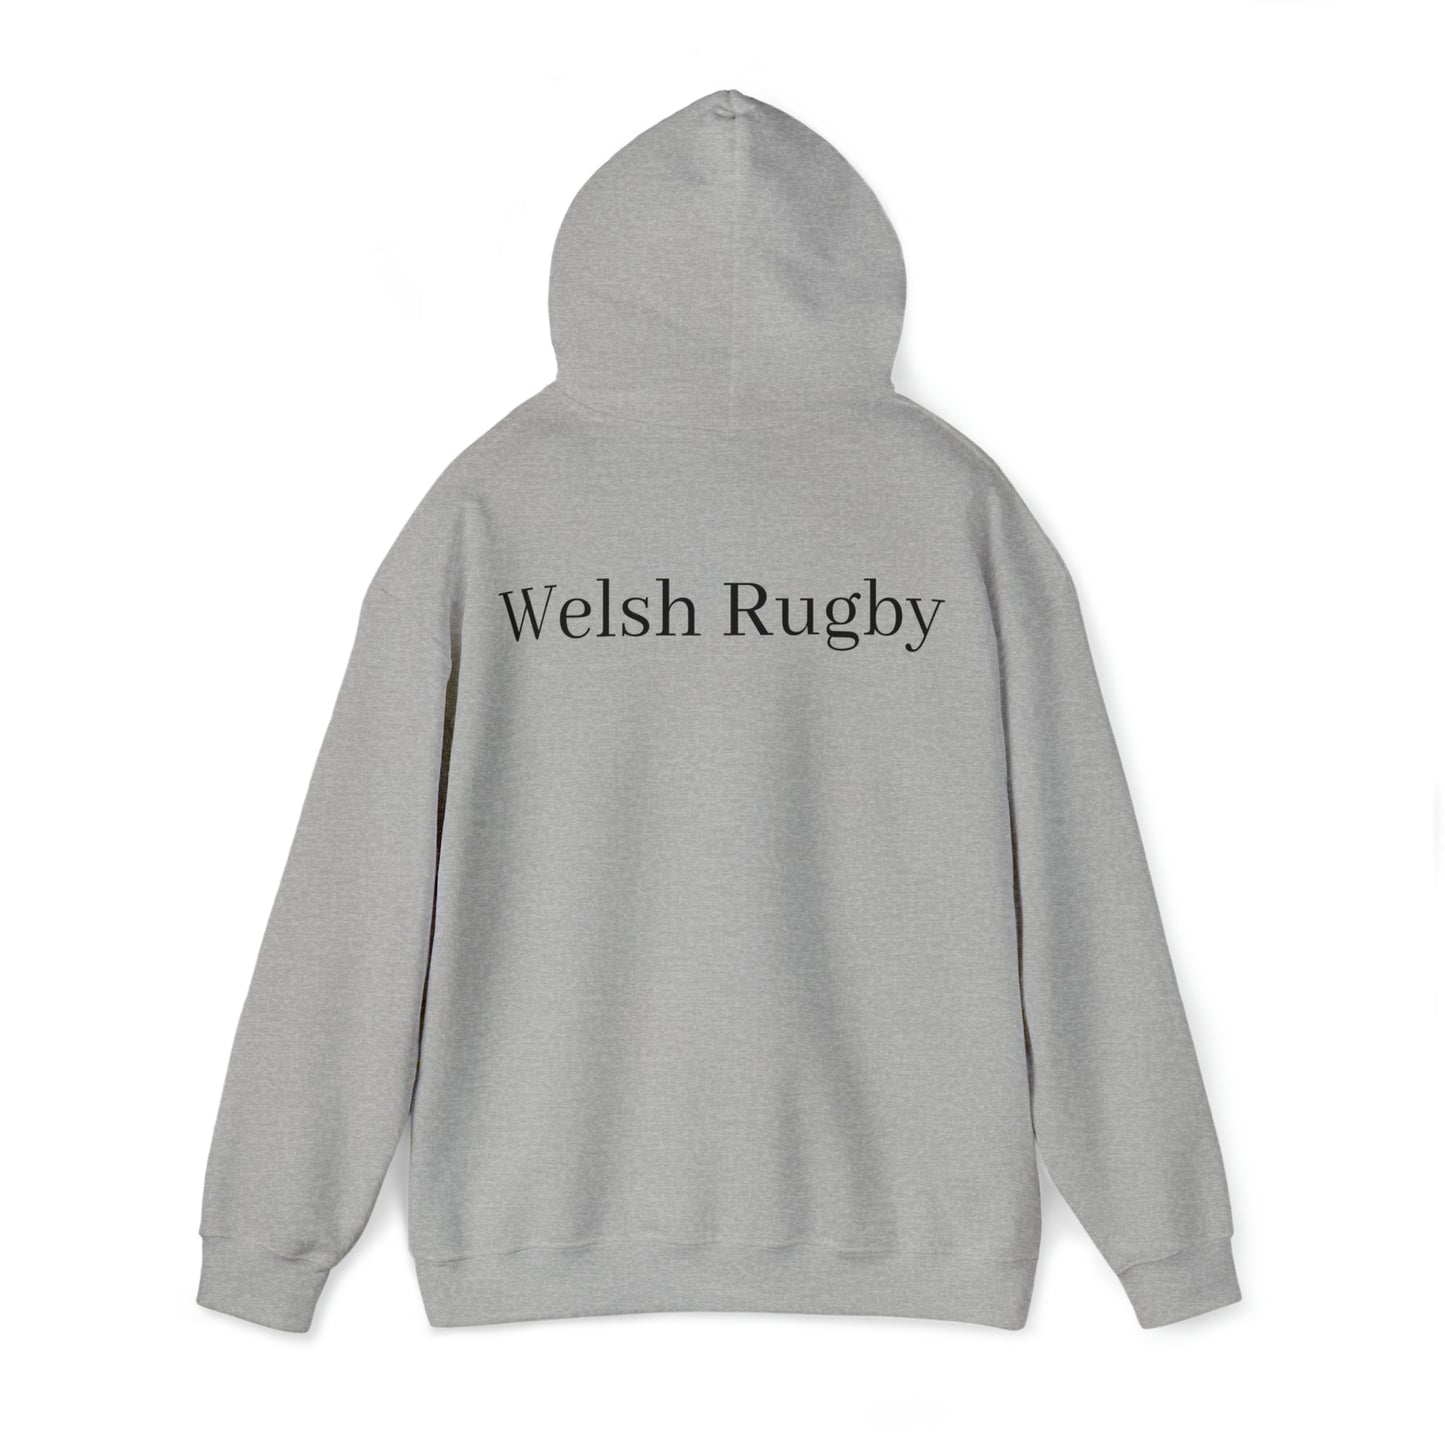 Ready Wales - light hoodies